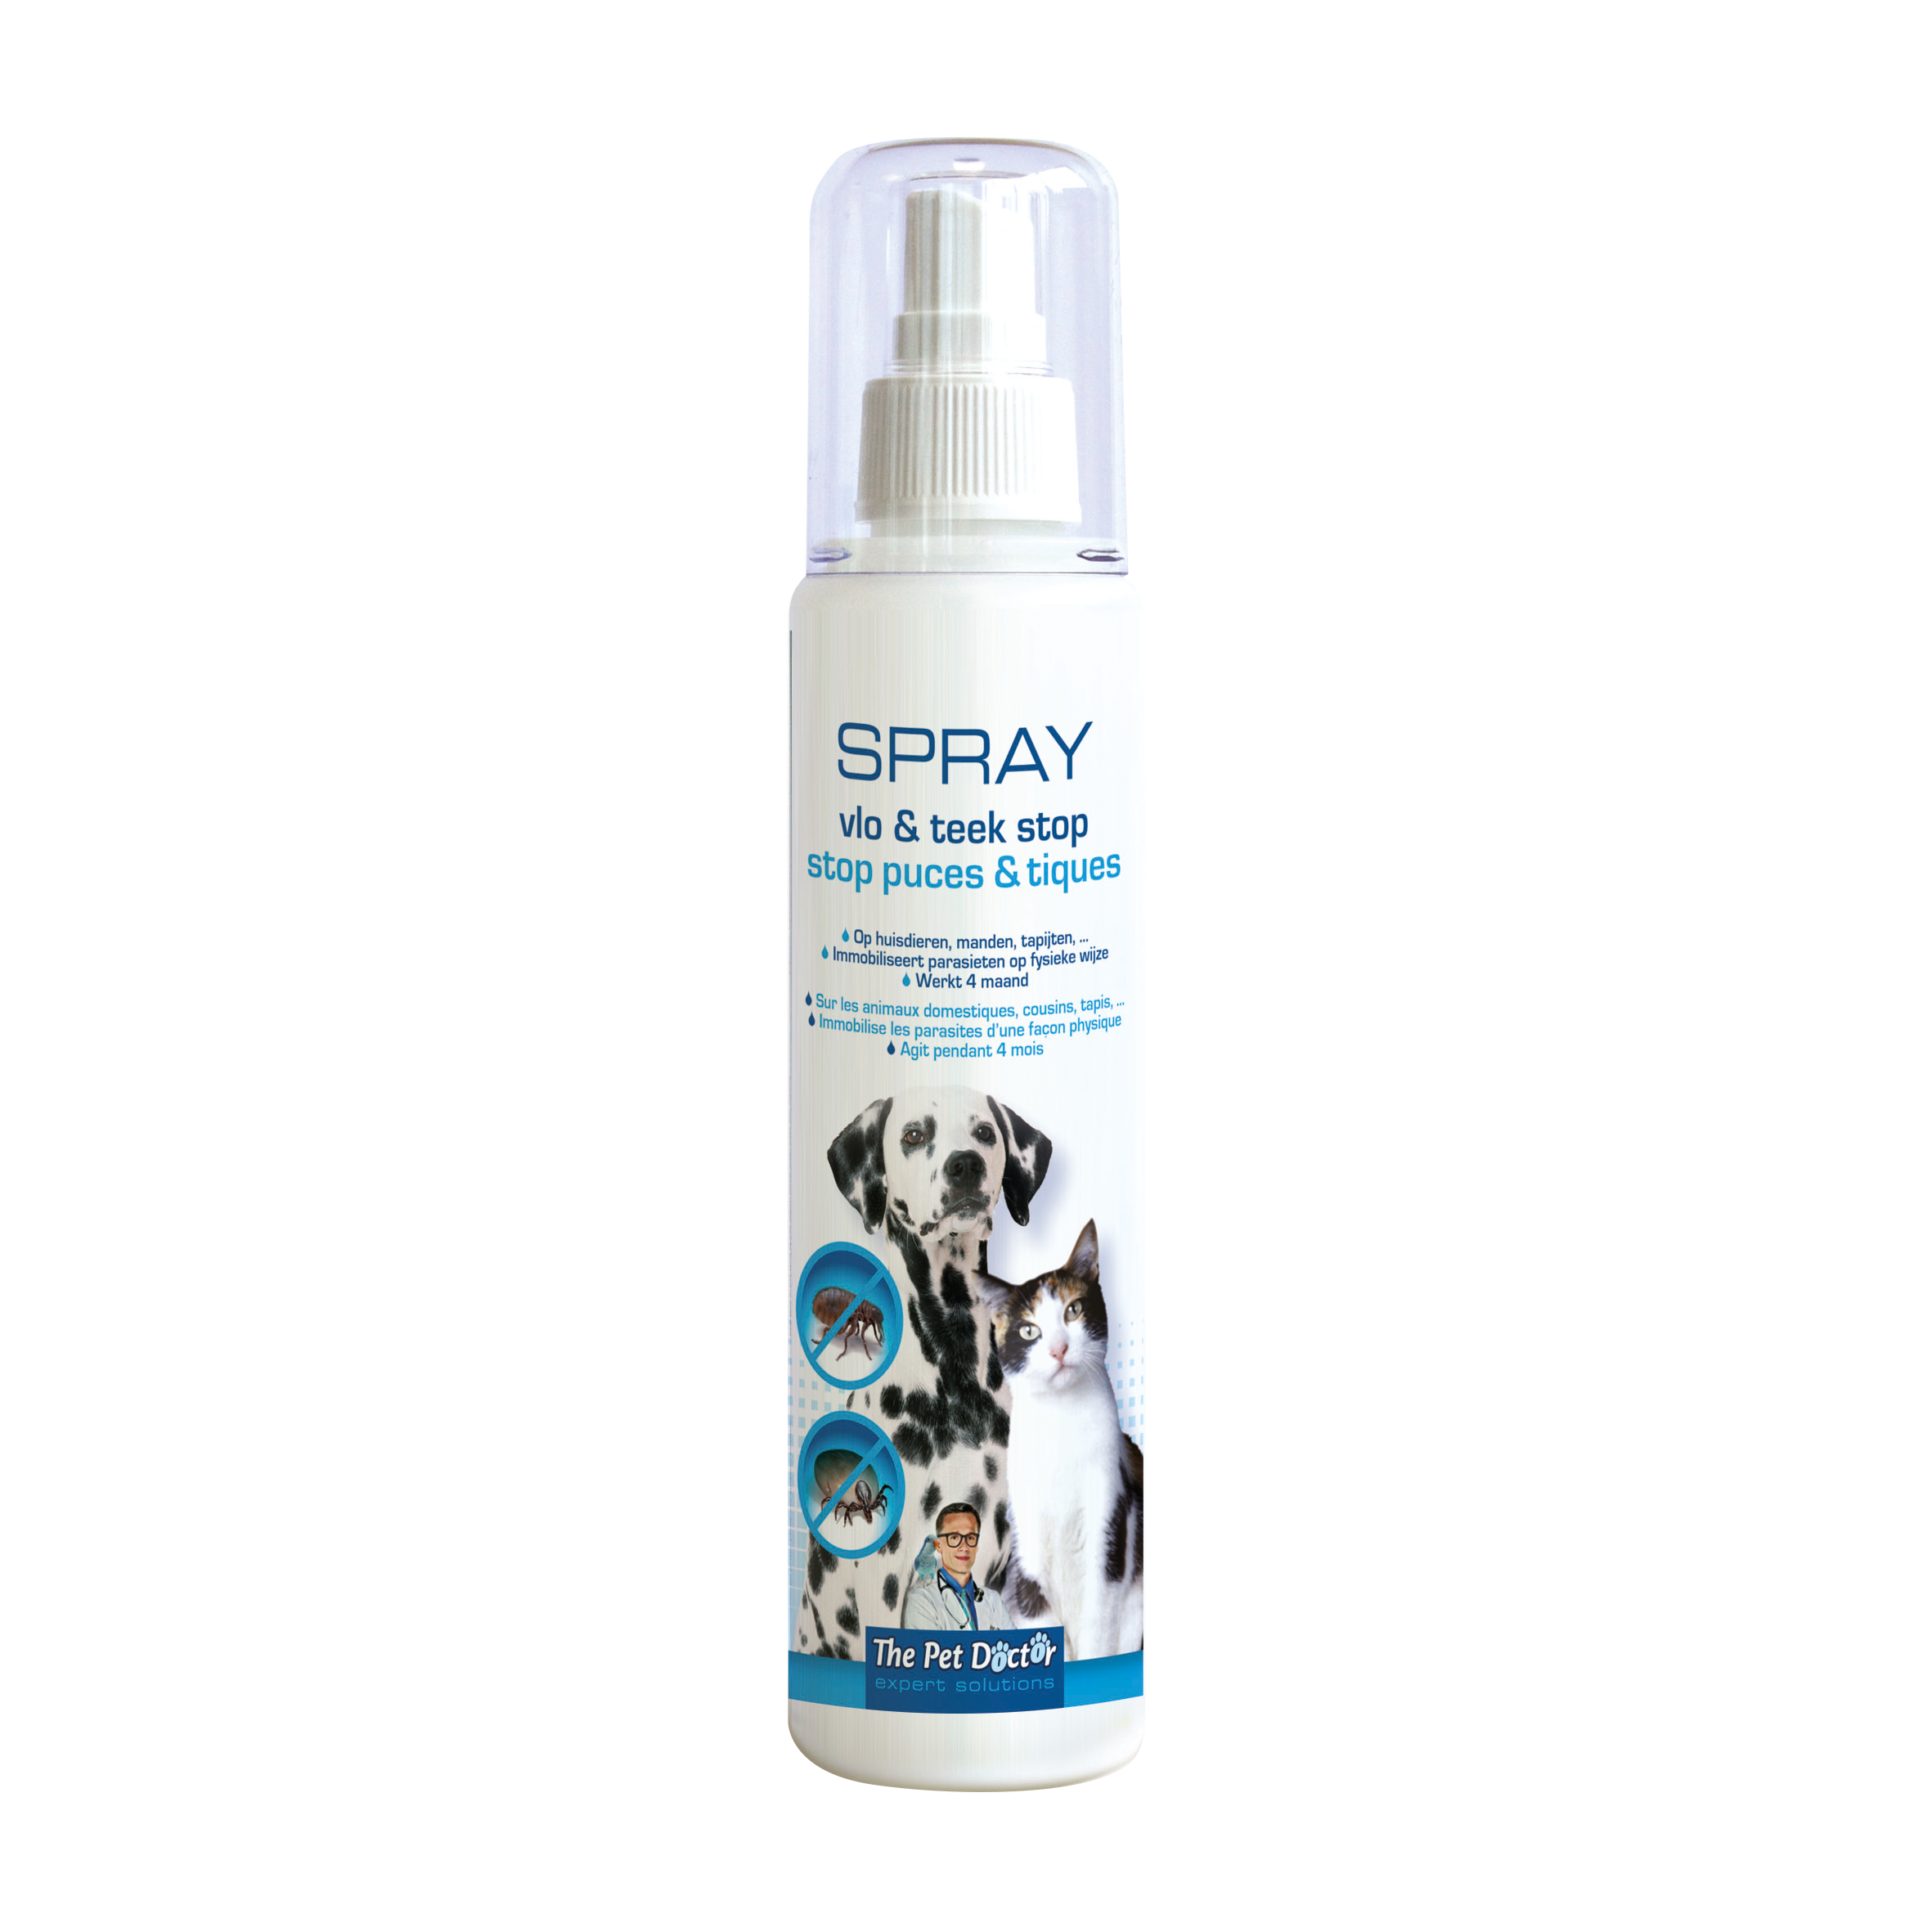 The Pet Doctor Vlo & Teek Stop Spray 200 ml image